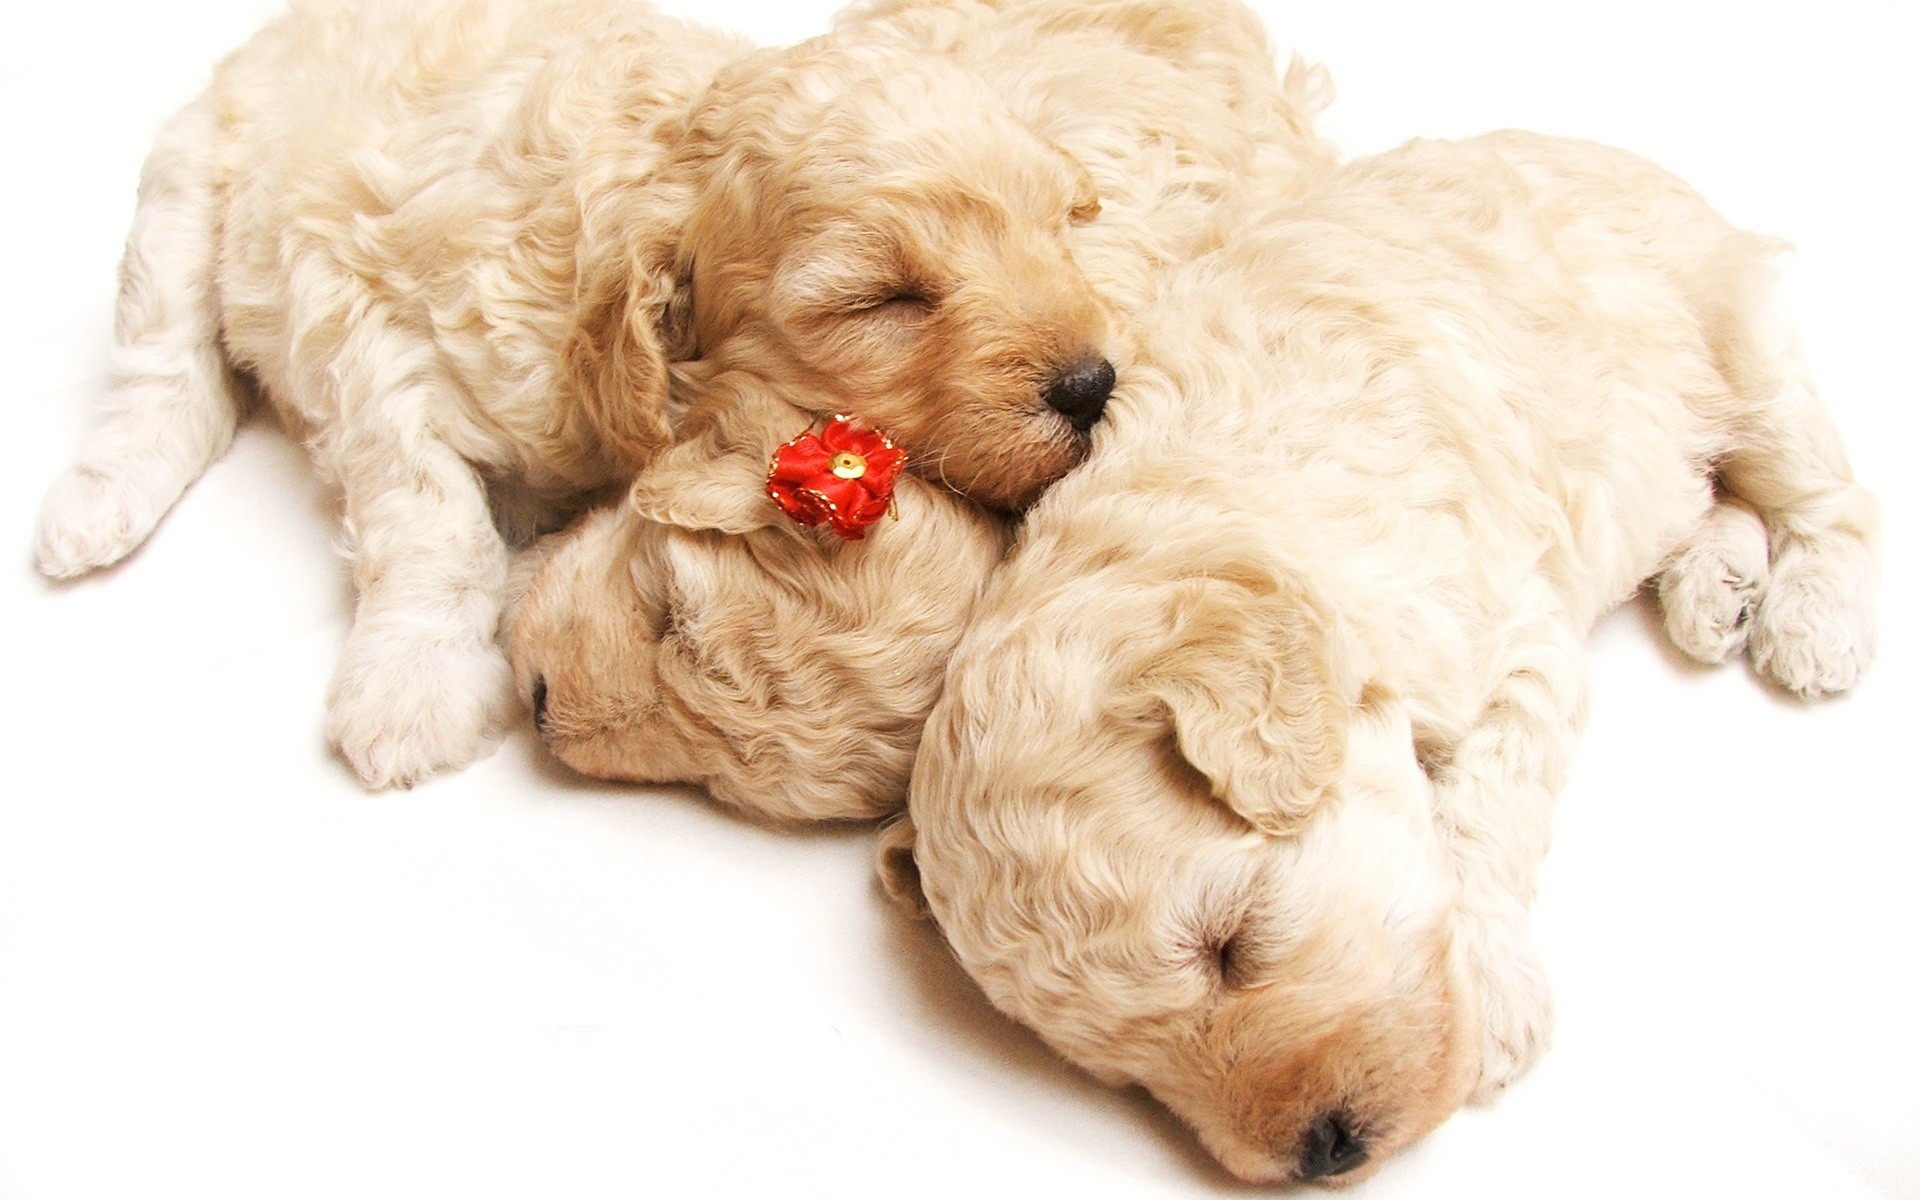 1920x1200 Image for cute sleeping puppies animal hd wallpaper